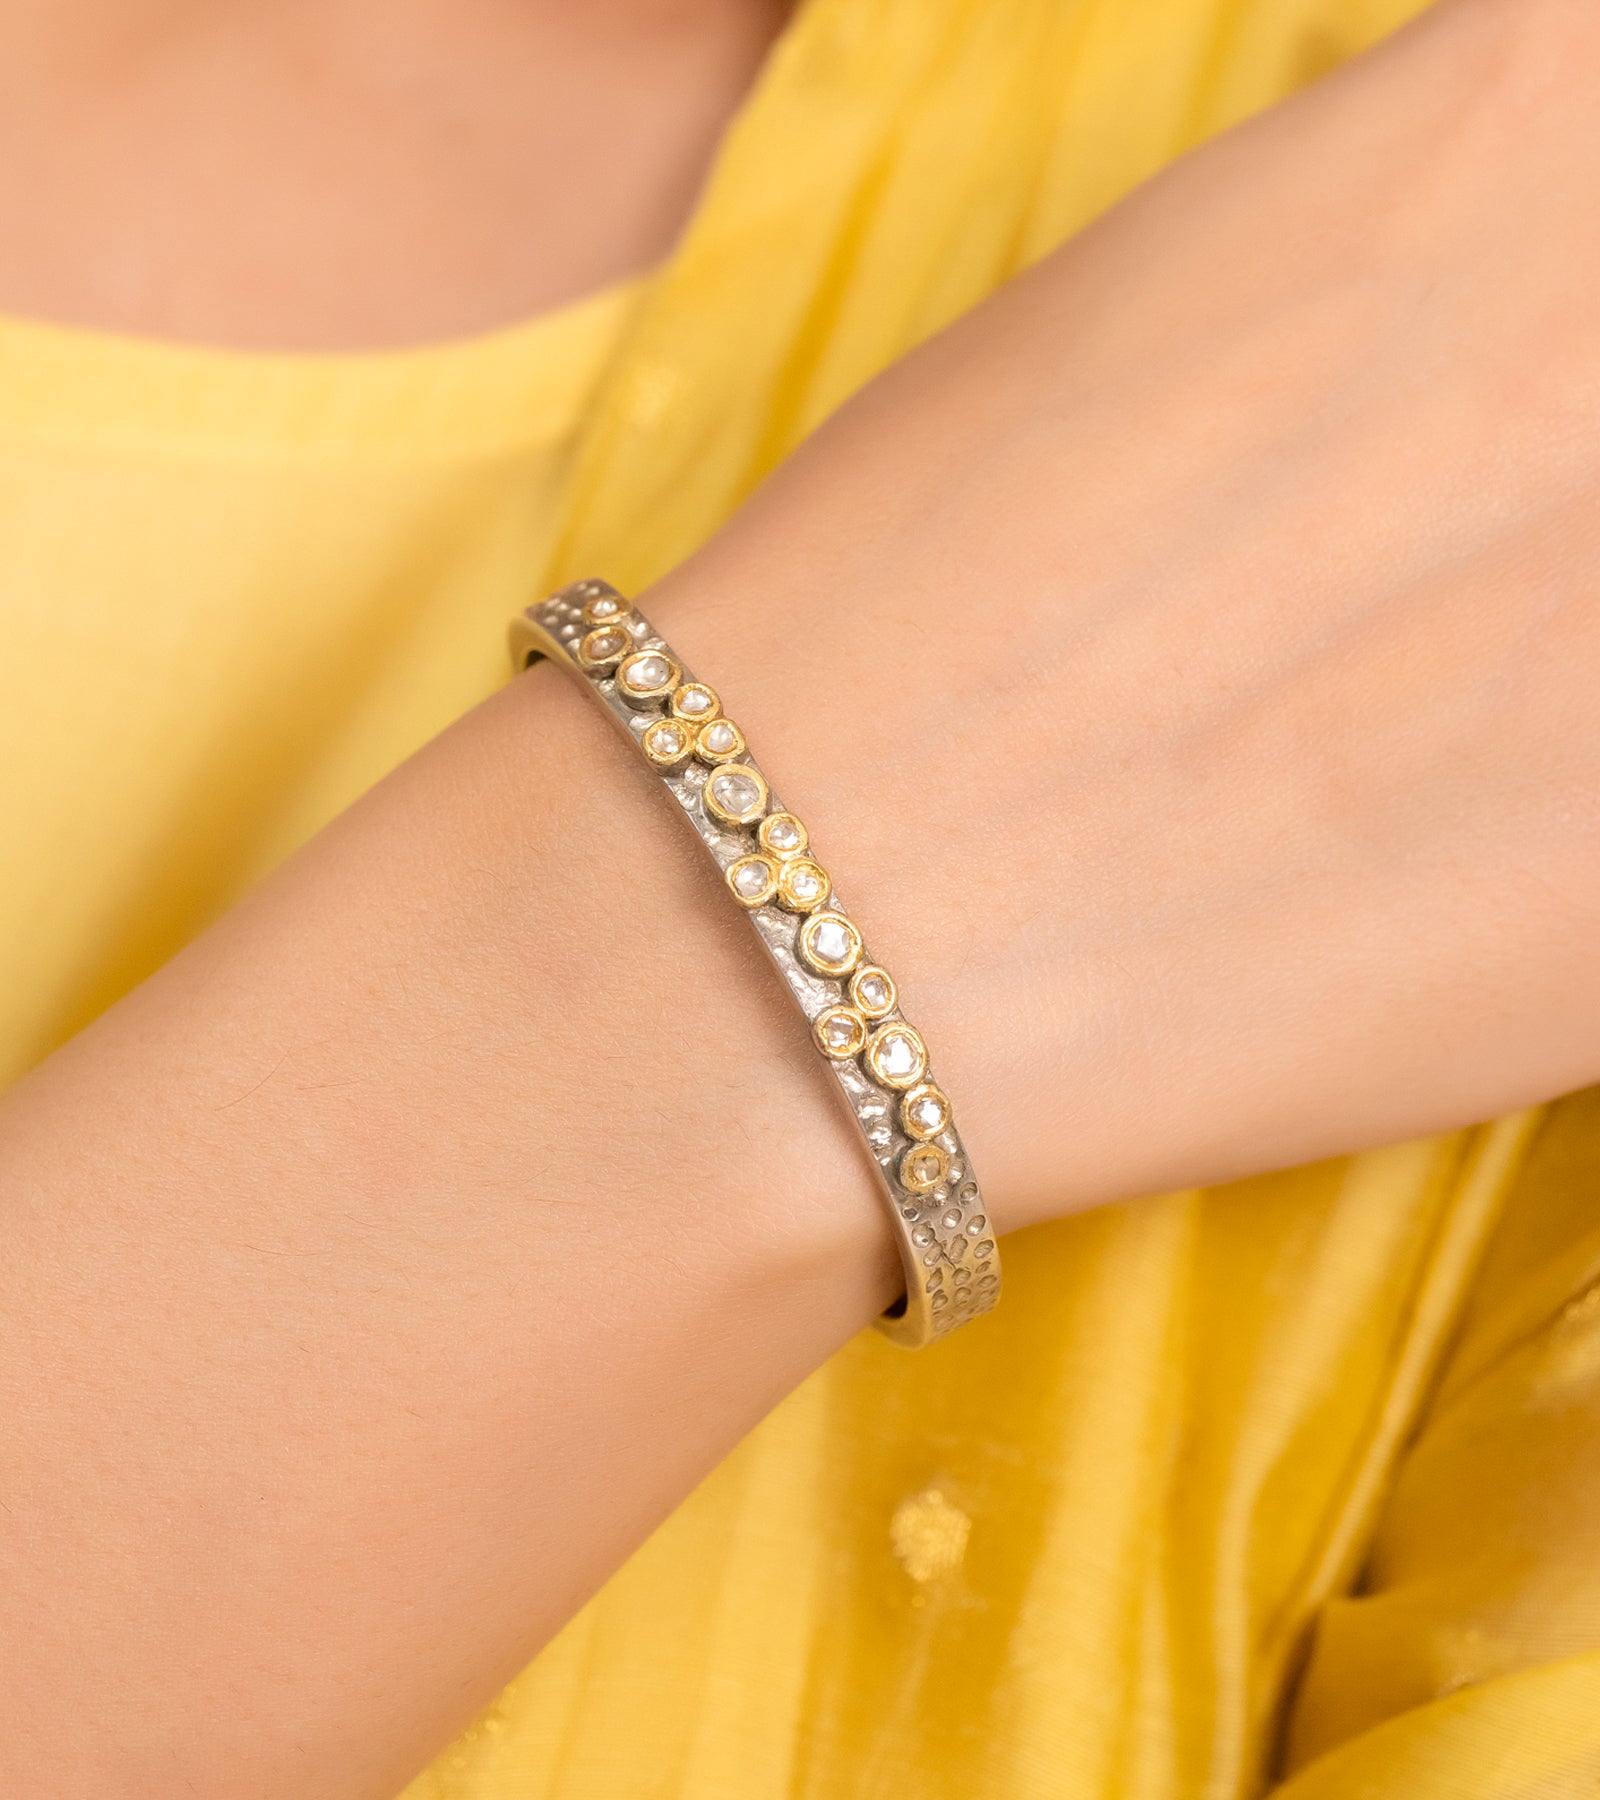 Indian Gold Bracelet by UNCUT Jewelry